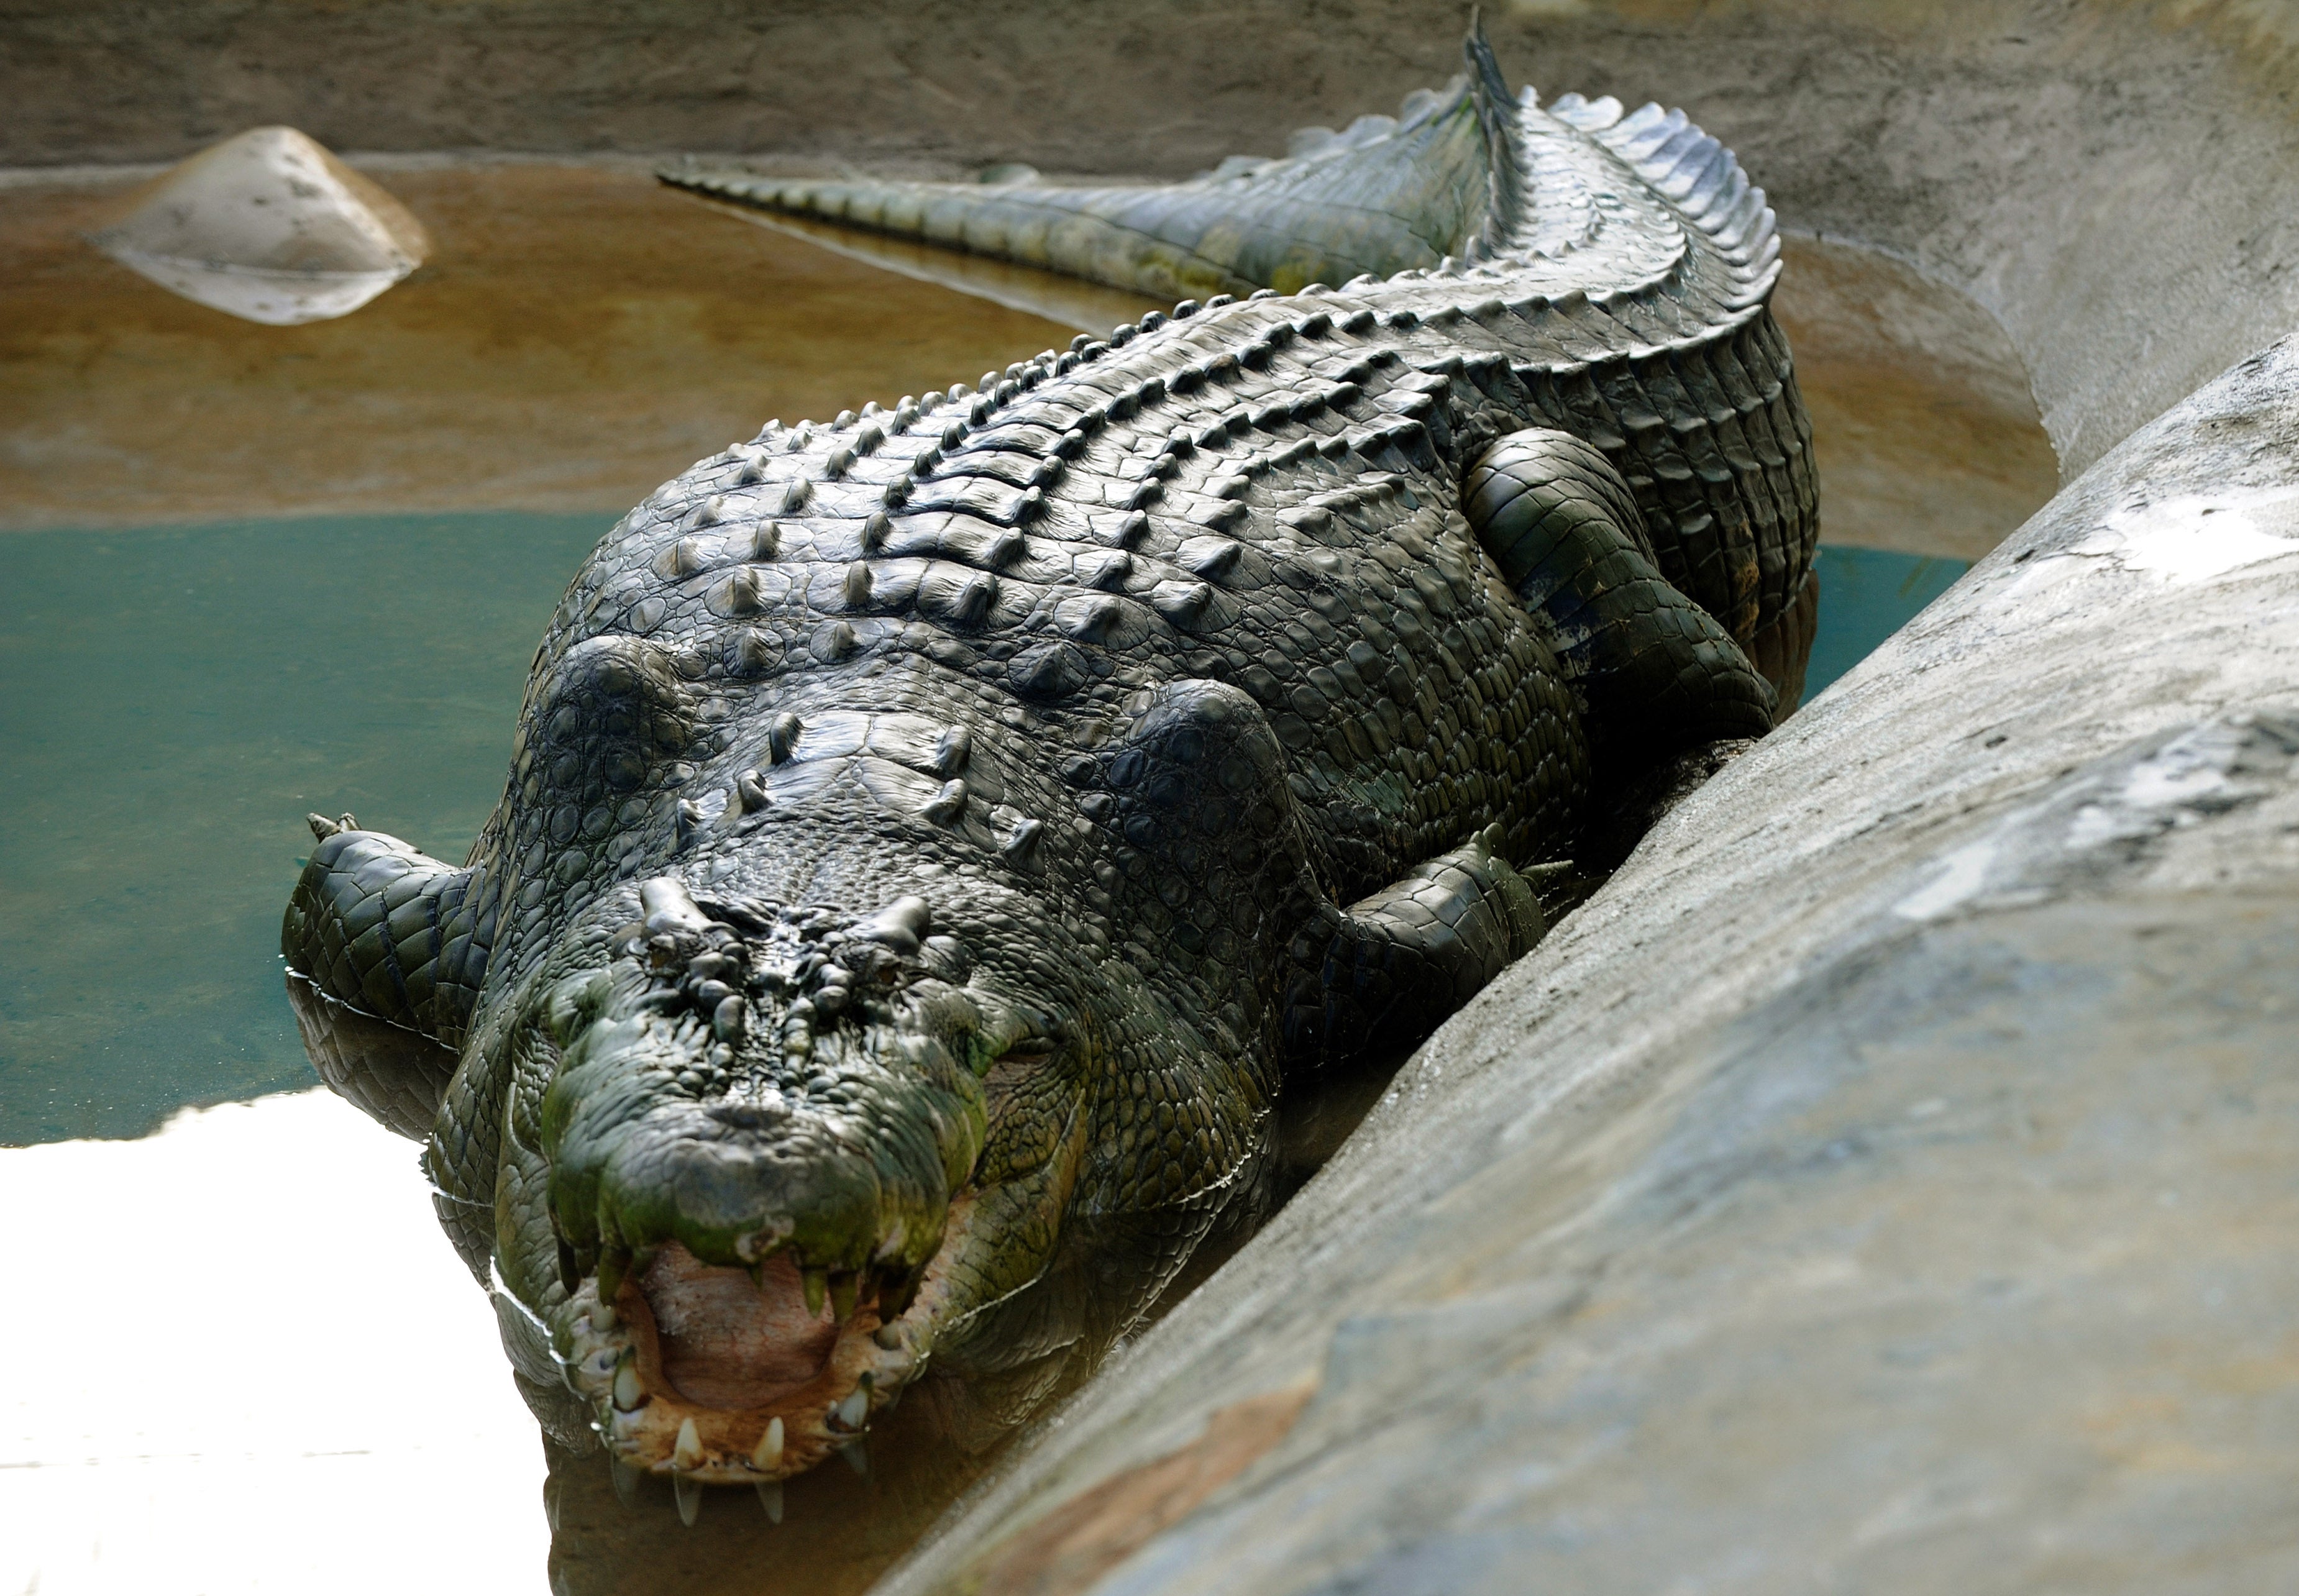 Saltwater crocodiles are Australia’s most dangerous predators